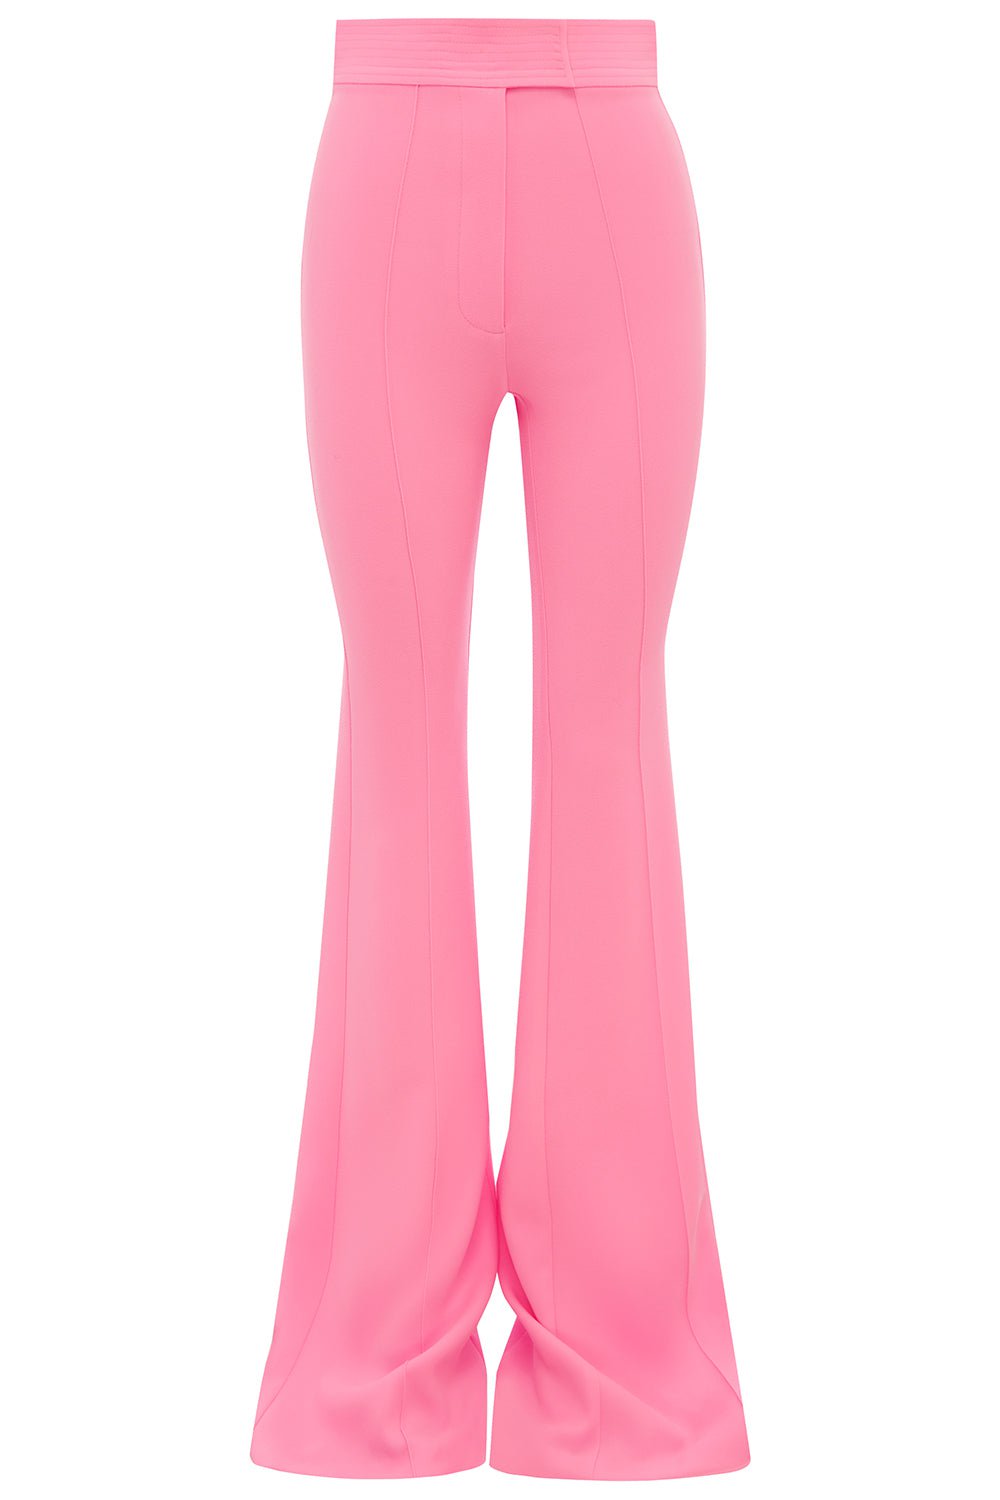 PerryMD pants - Virtual Pink